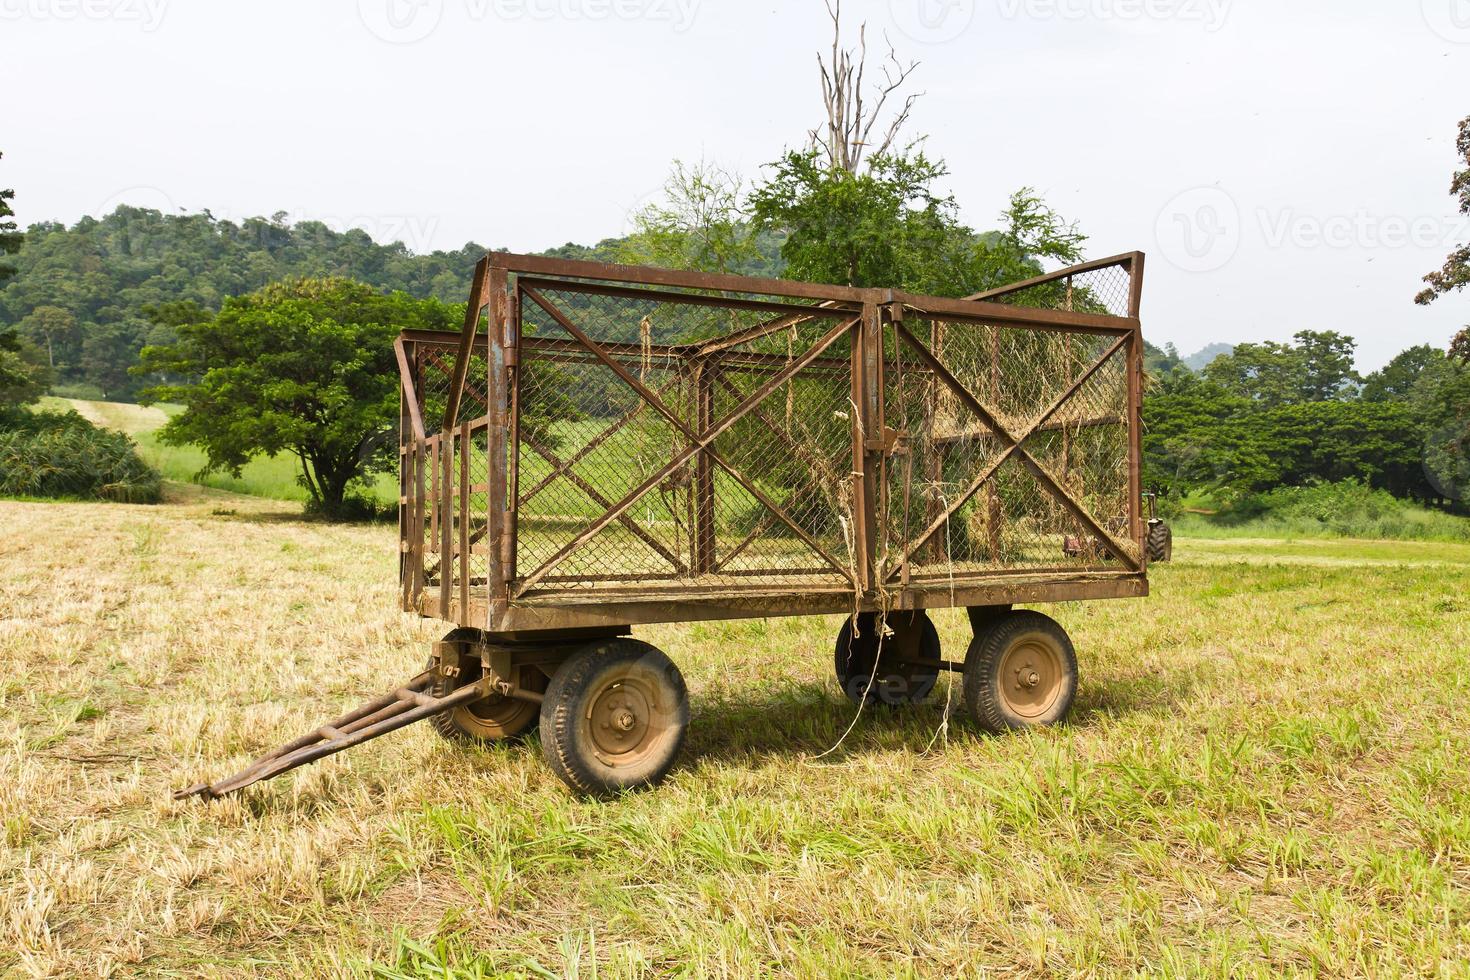 Hay wagon in farm photo